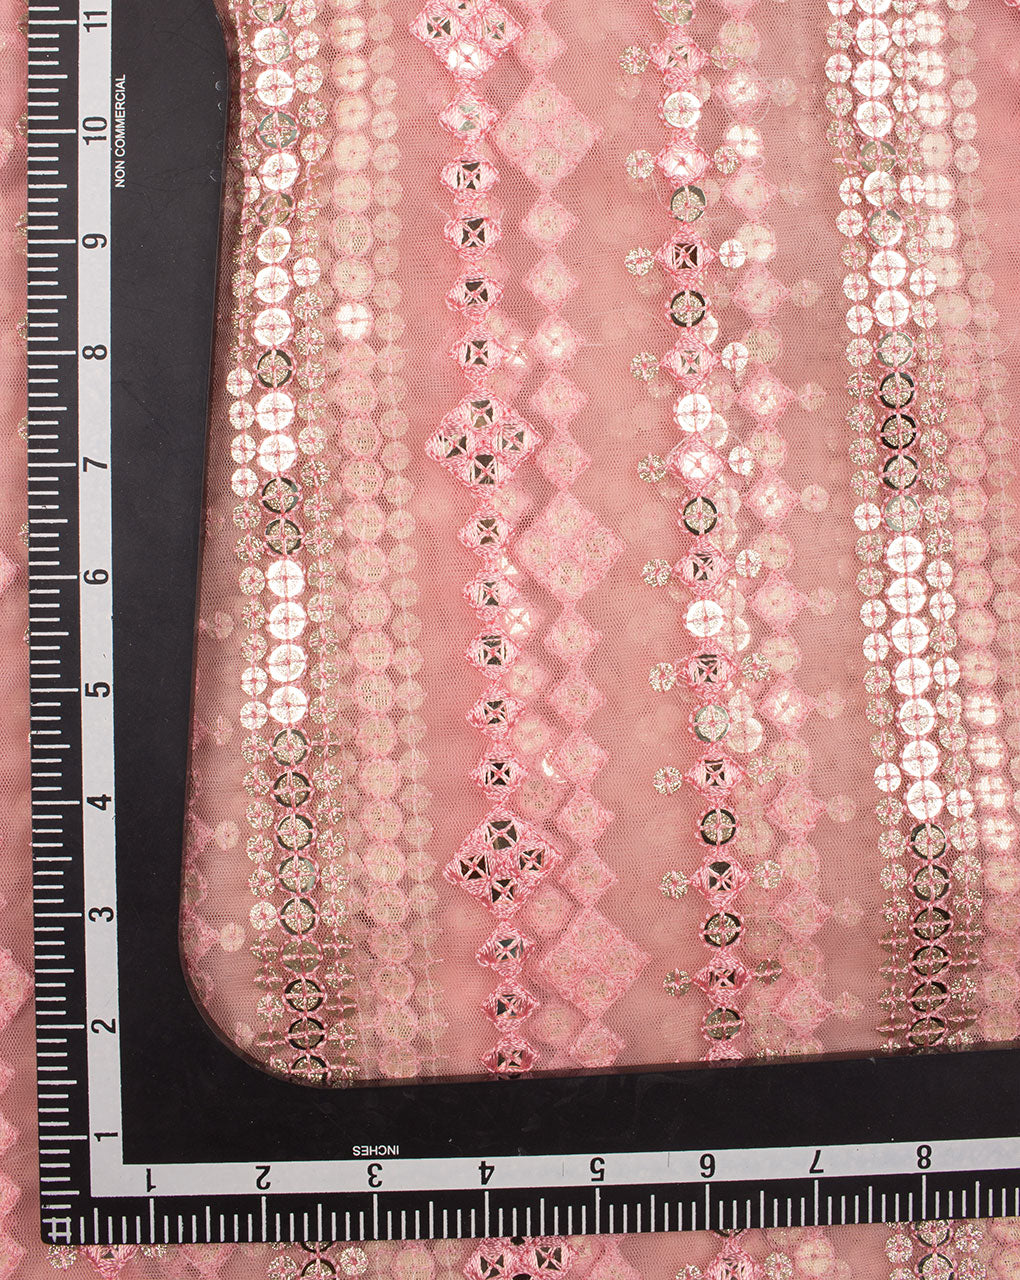 Salmon Gold Stripes Embroidered Premium Net Fabric - Fabriclore.com